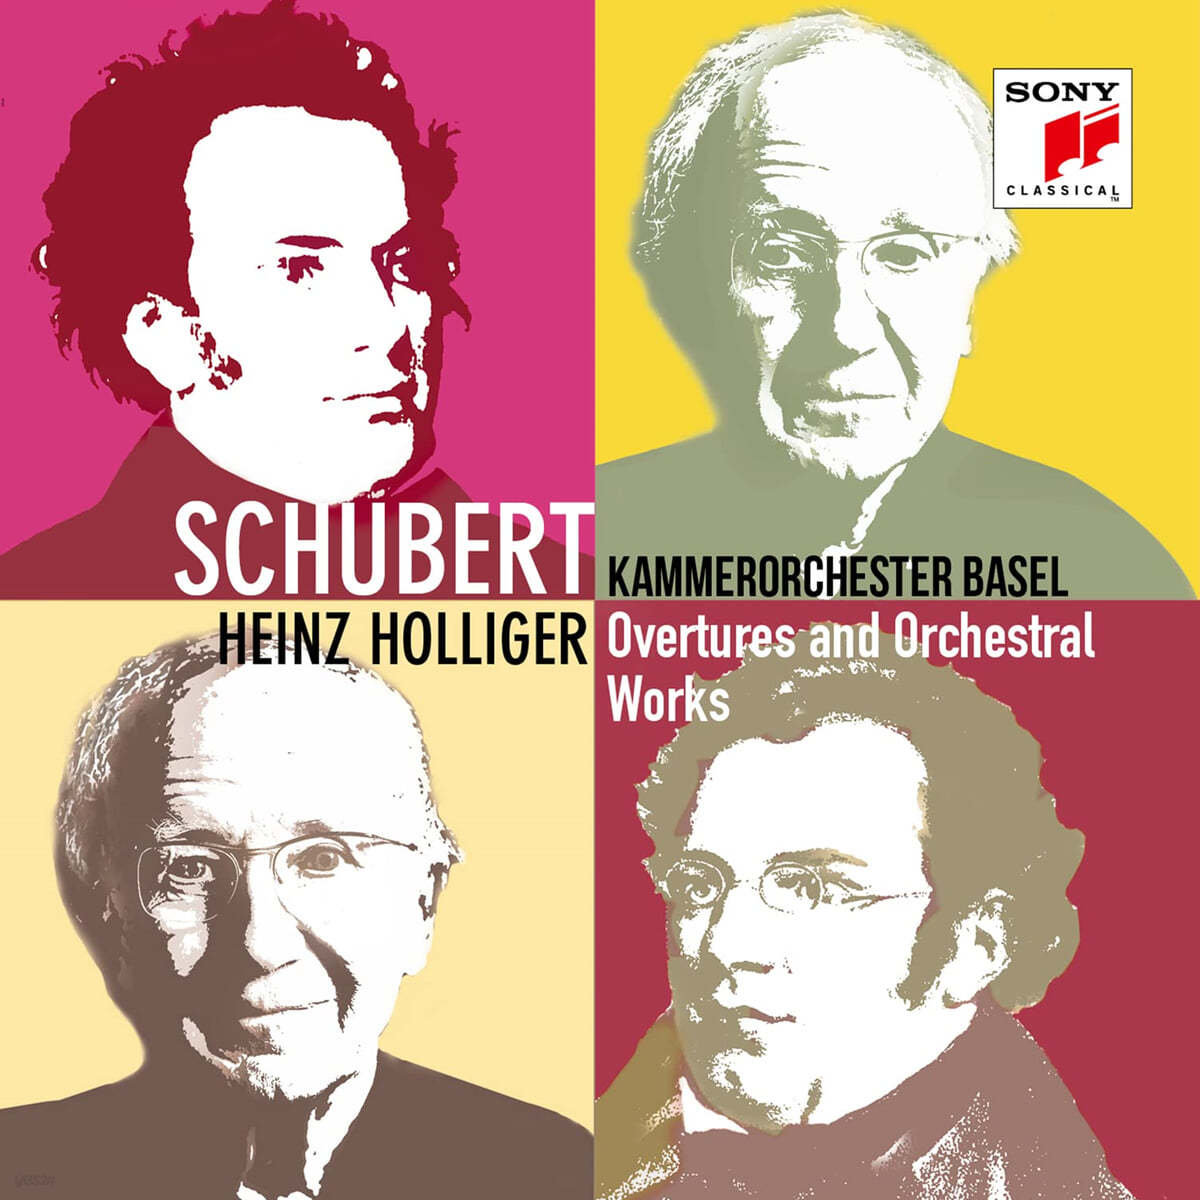 Heinz Holliger 슈베르트: 서곡 D장조, 그랑듀오, 교향곡 10번 - 하인츠 홀리거 (Schubert: Overtures, Orchestral Works) 